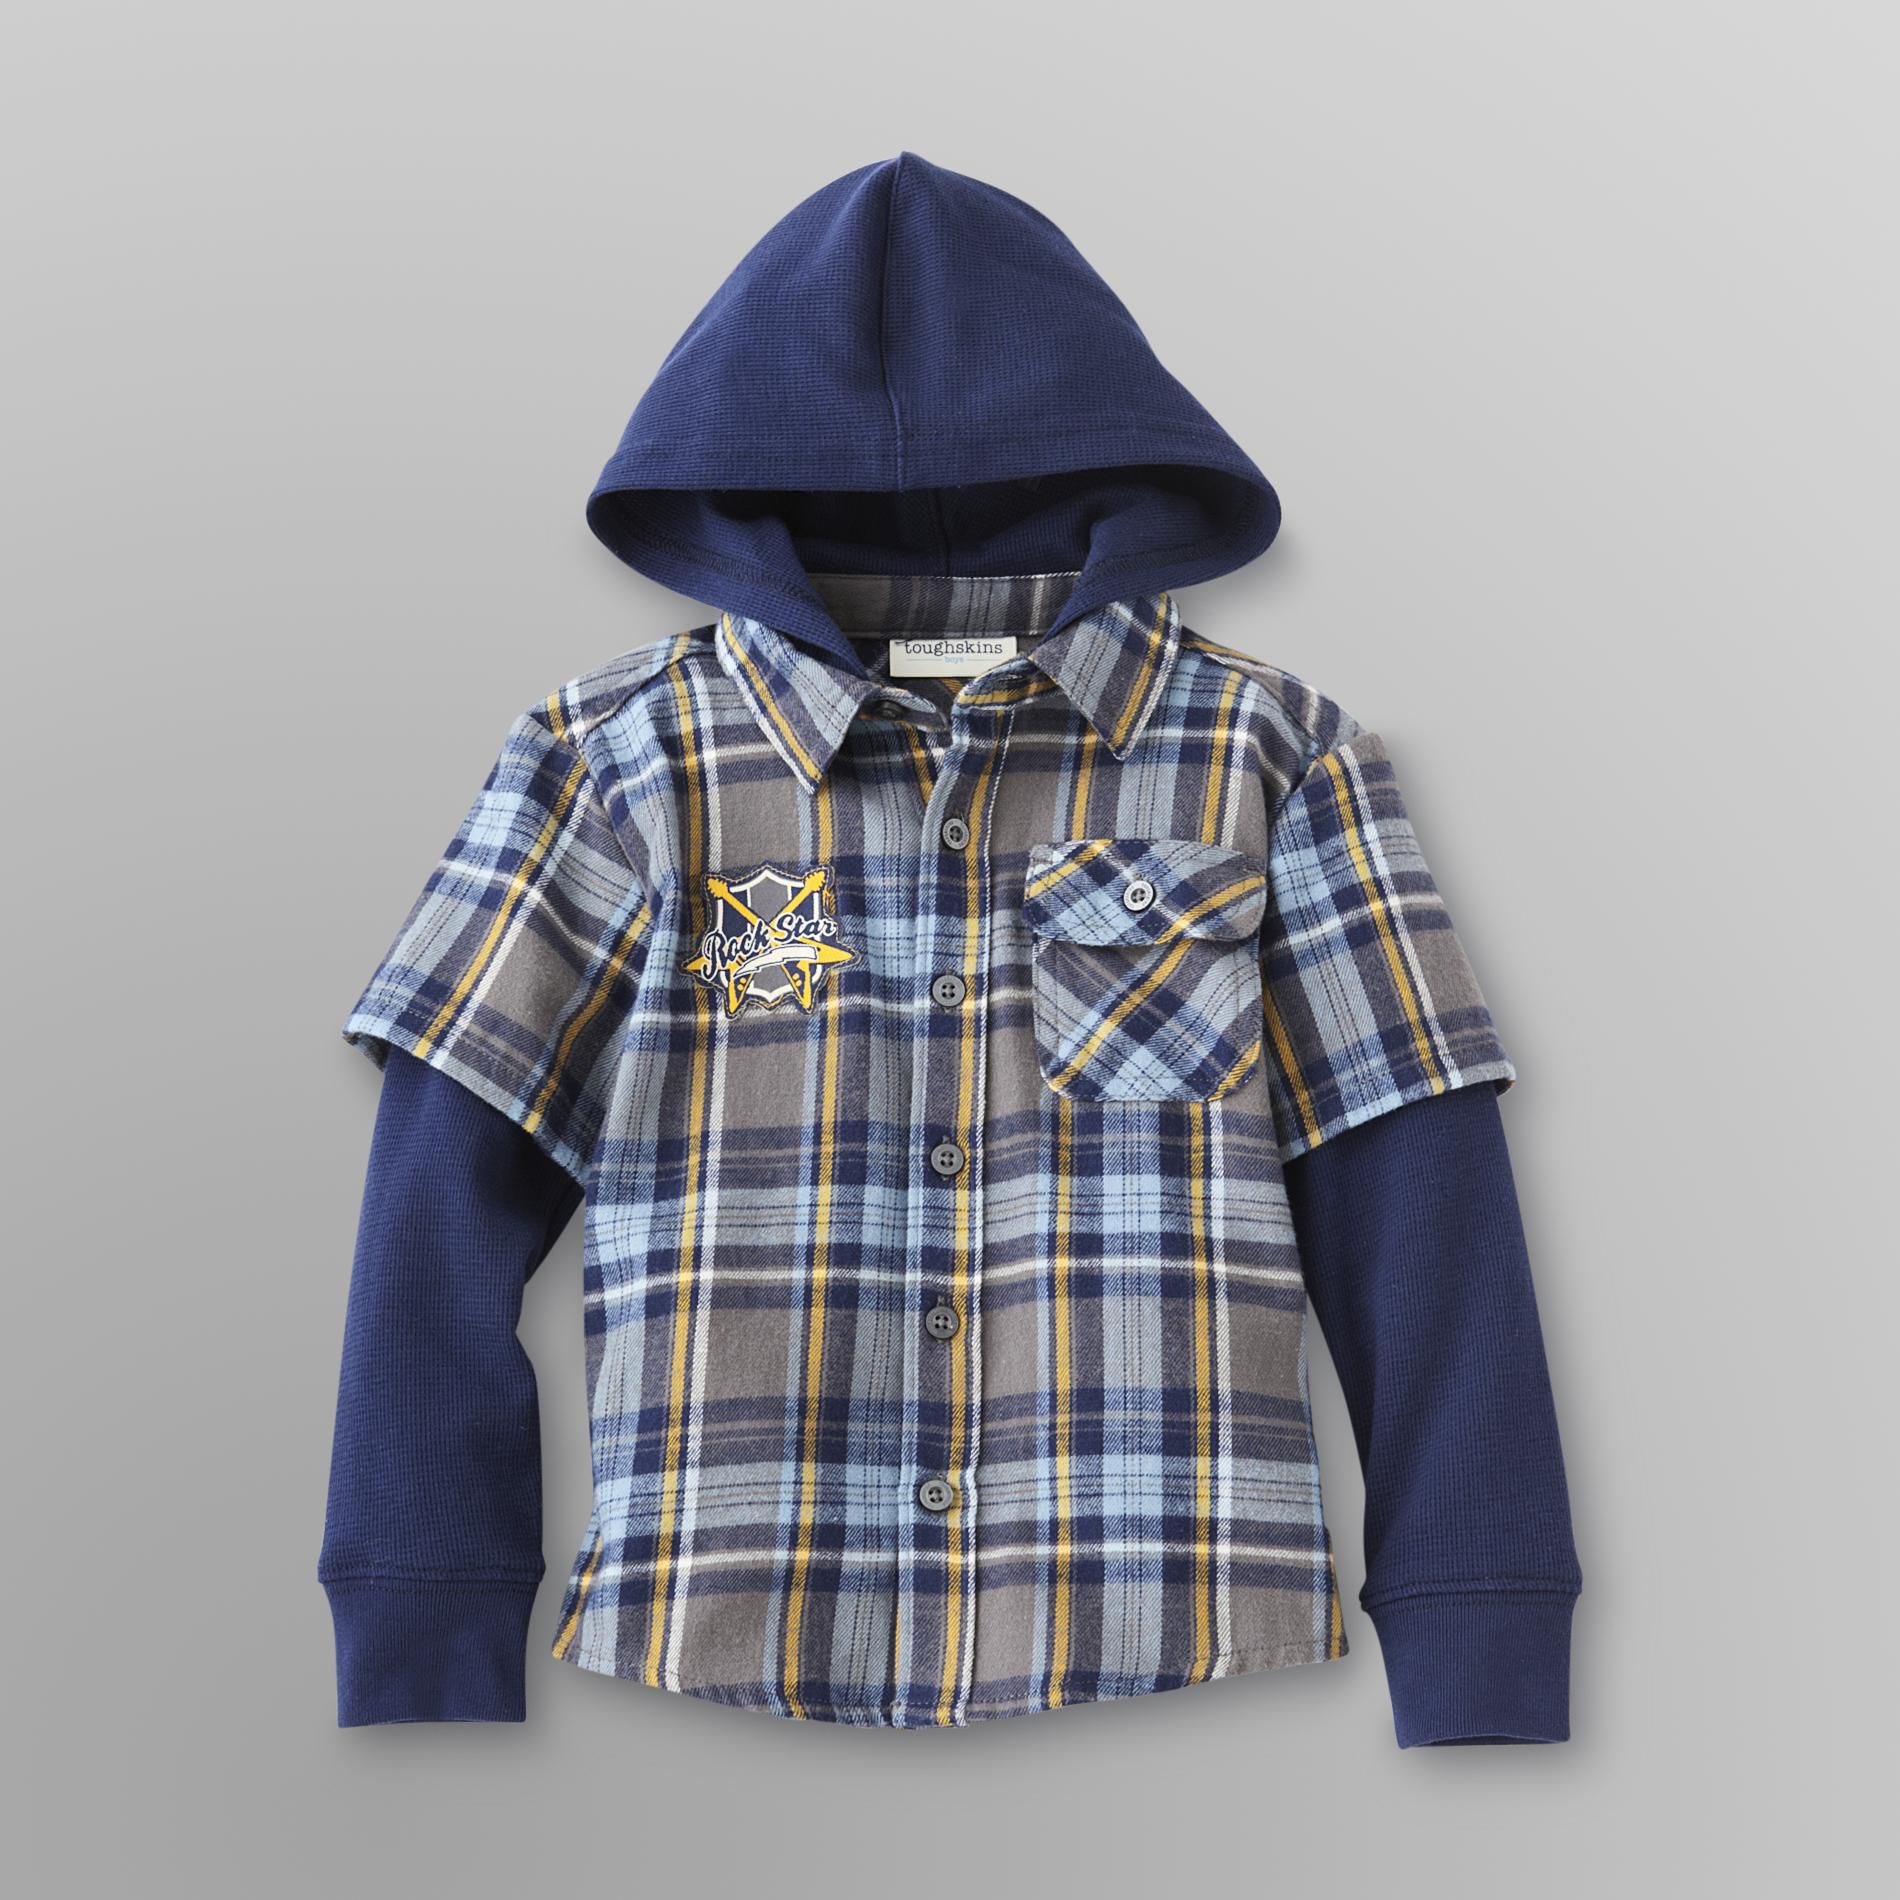 Toughskins Infant & Toddler Boy's Hooded Flannel Shirt